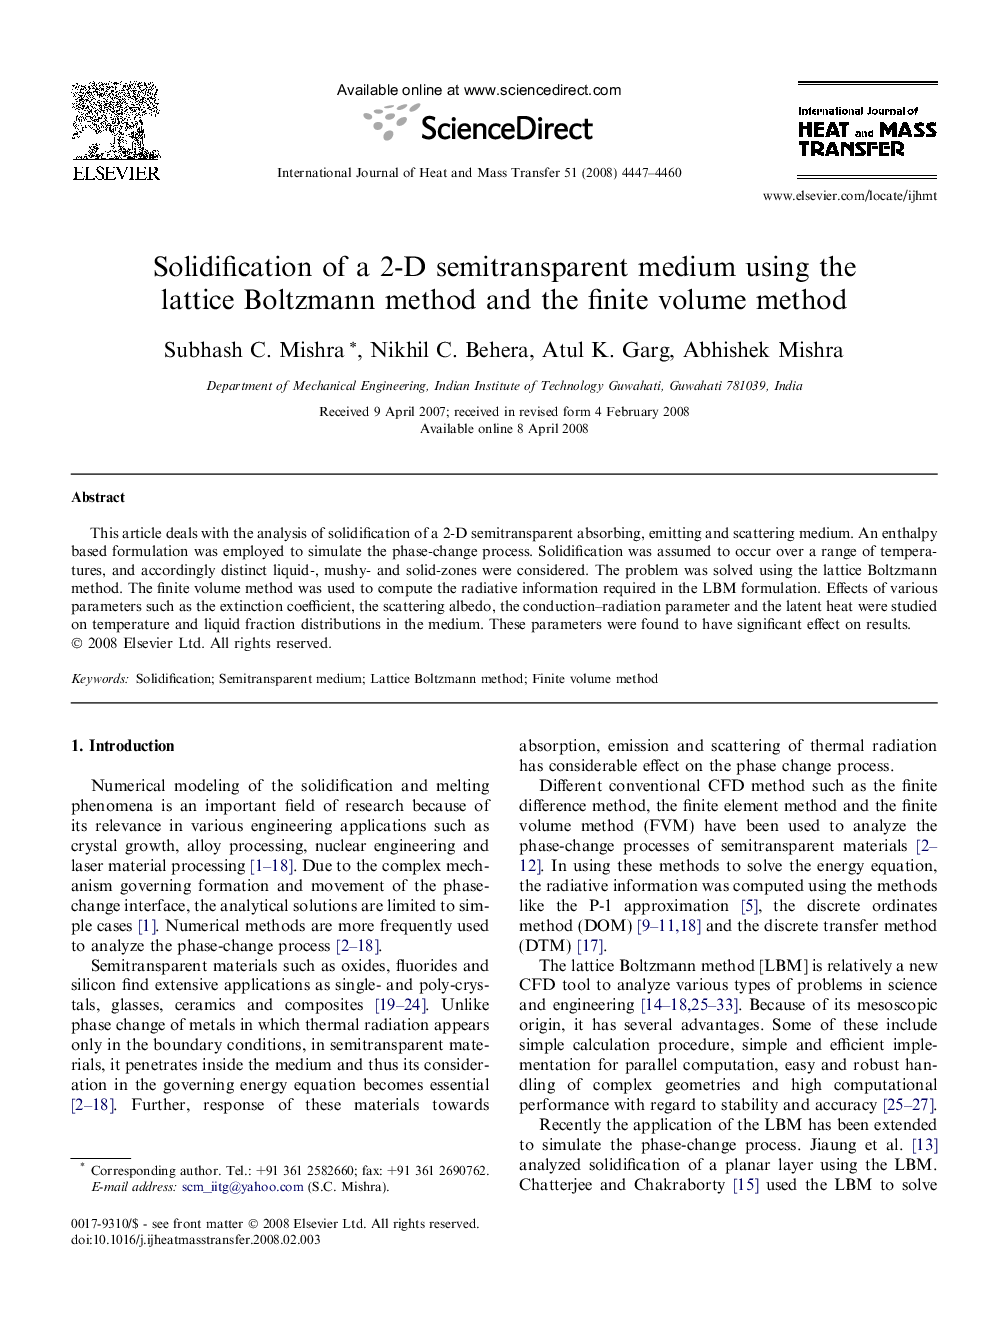 Solidification of a 2-D semitransparent medium using the lattice Boltzmann method and the finite volume method